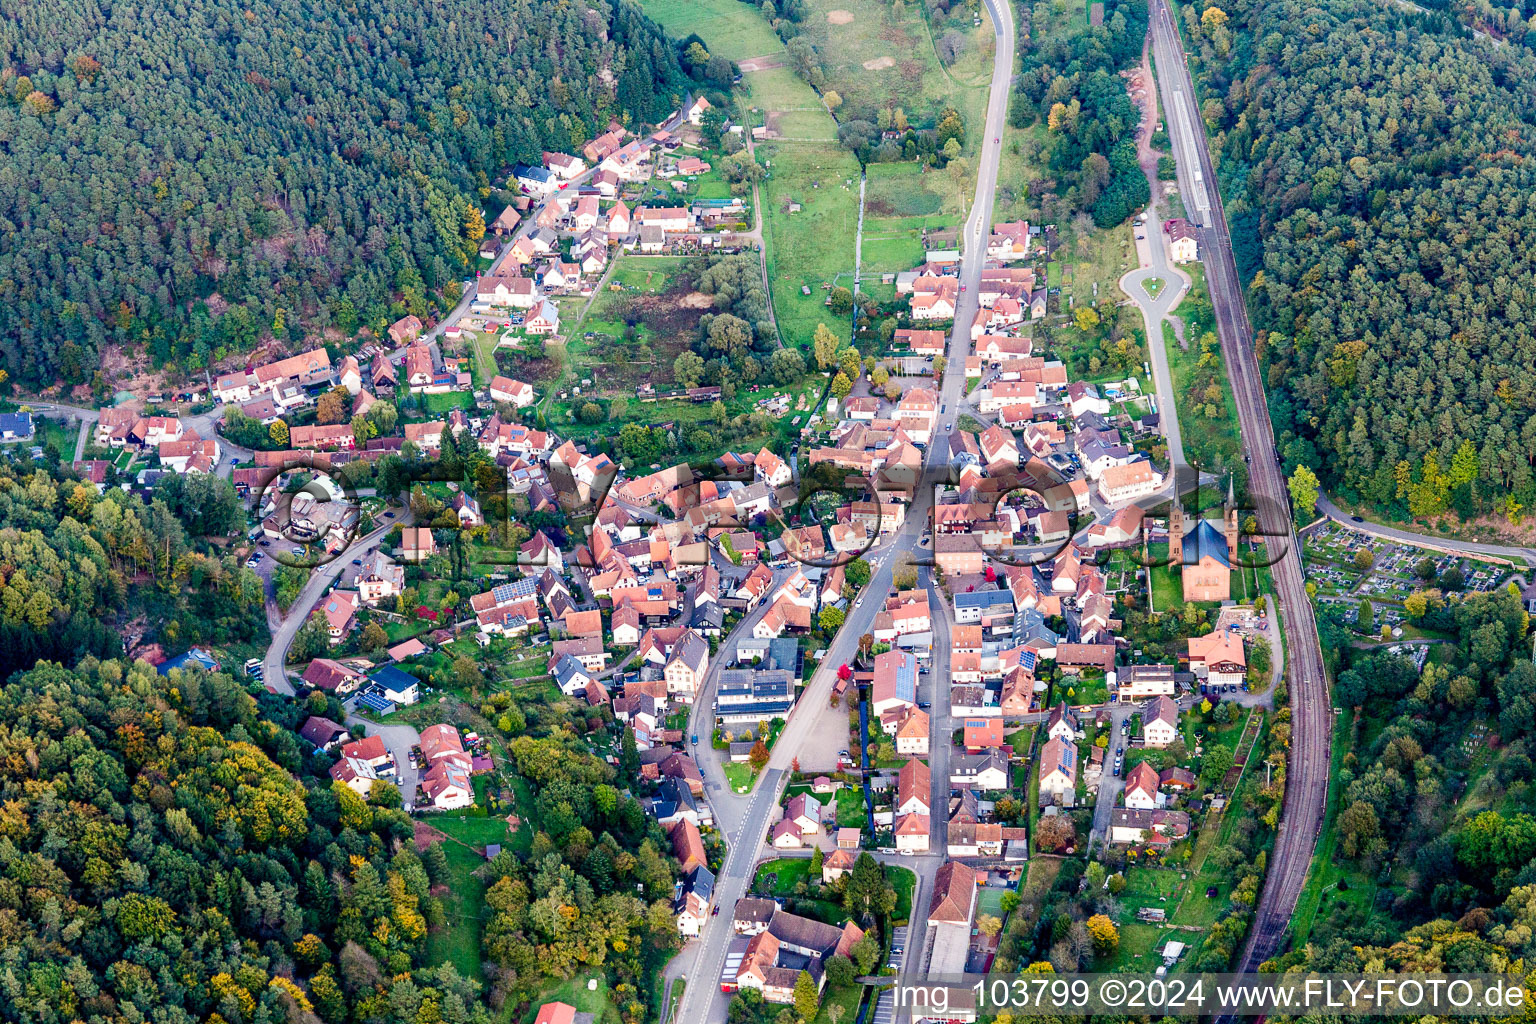 Village view in Wilgartswiesen in the state Rhineland-Palatinate, Germany